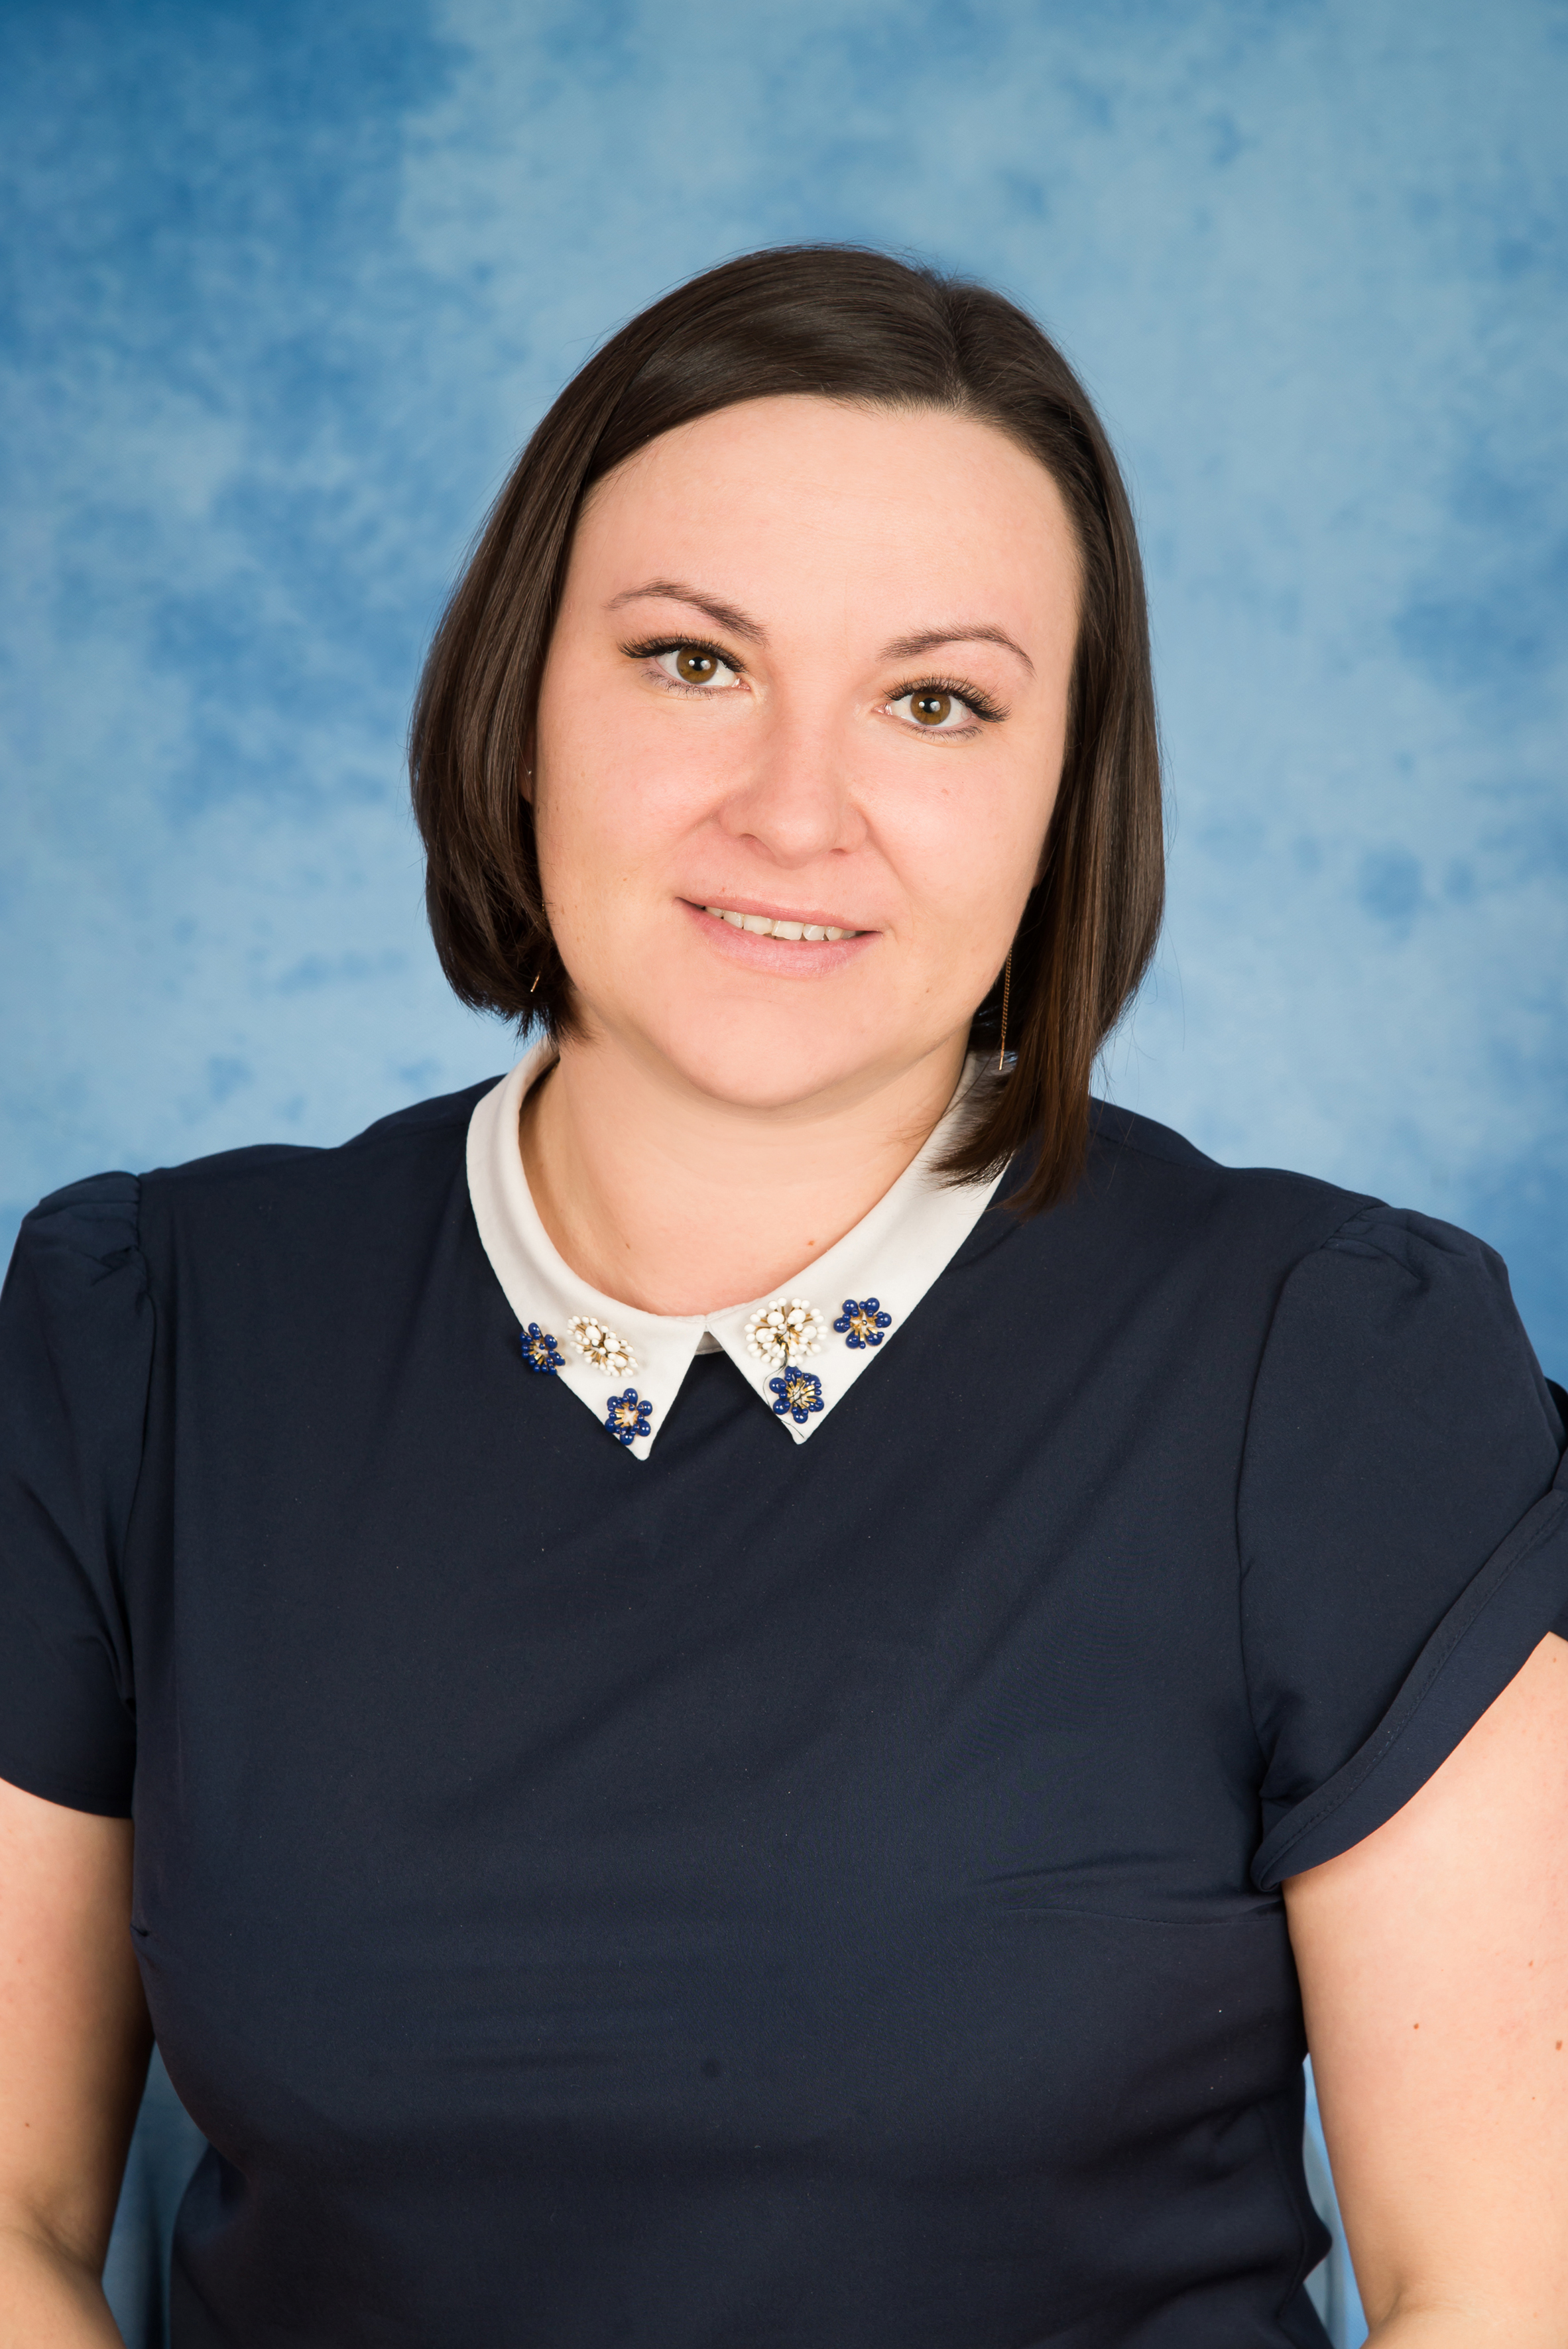 педагог - психолог Баранова Анастасия Сергеевна.